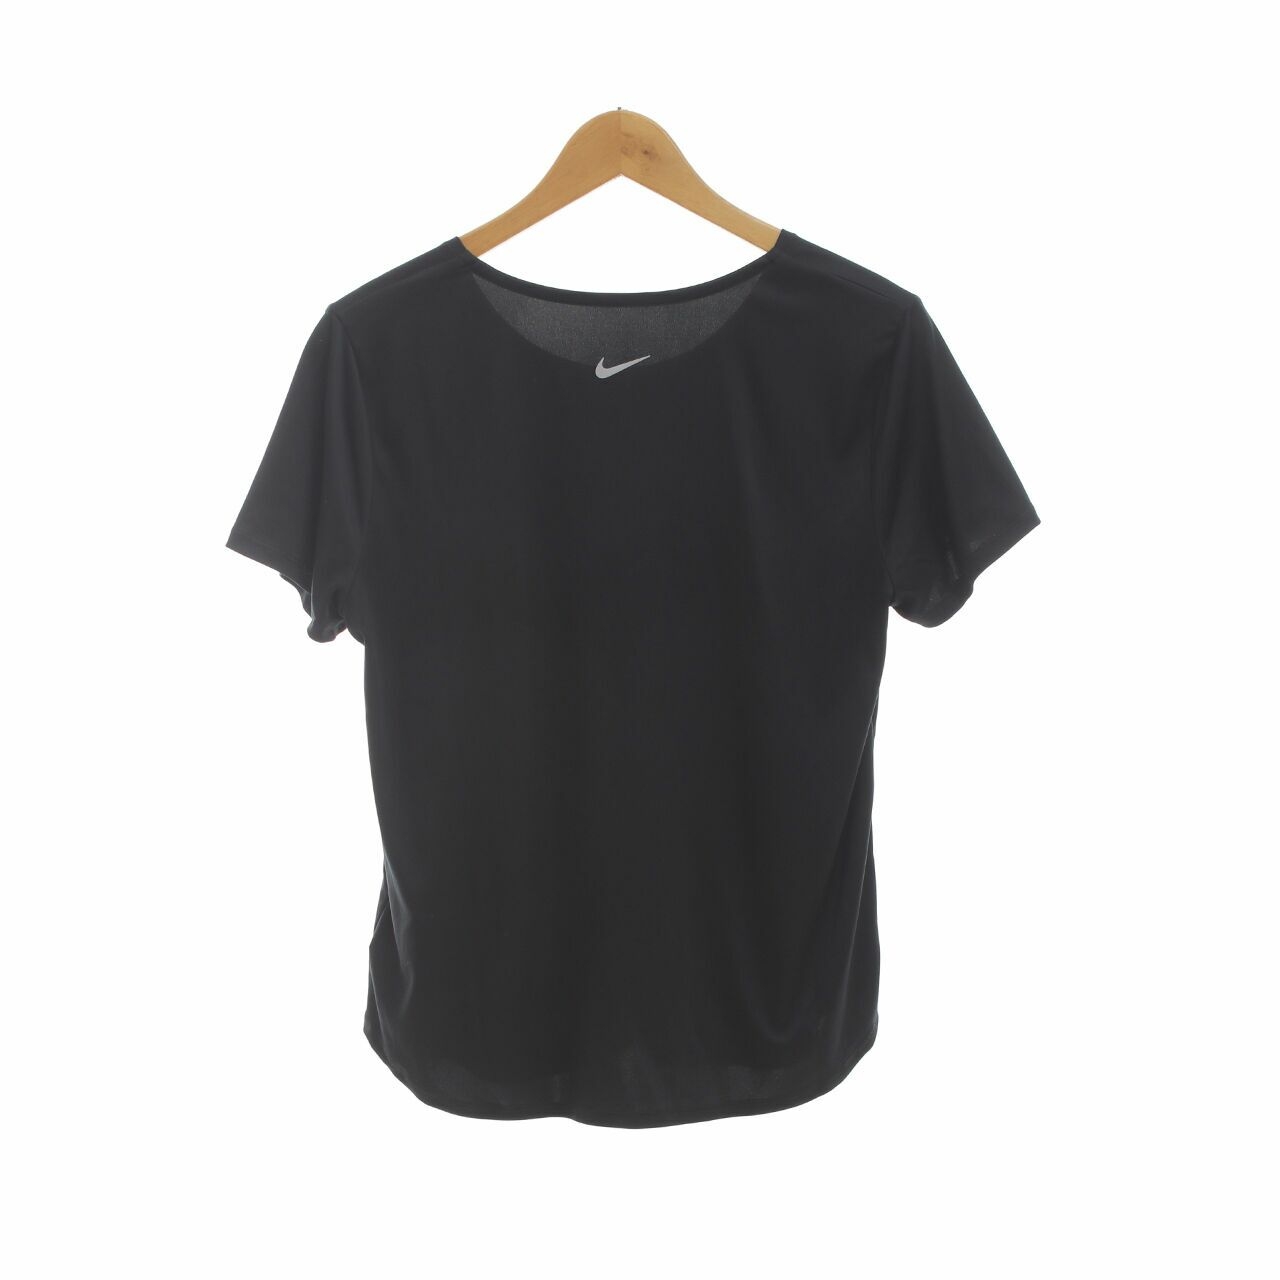 Nike Running Swoosh Top Short Sleeve T-Shirt